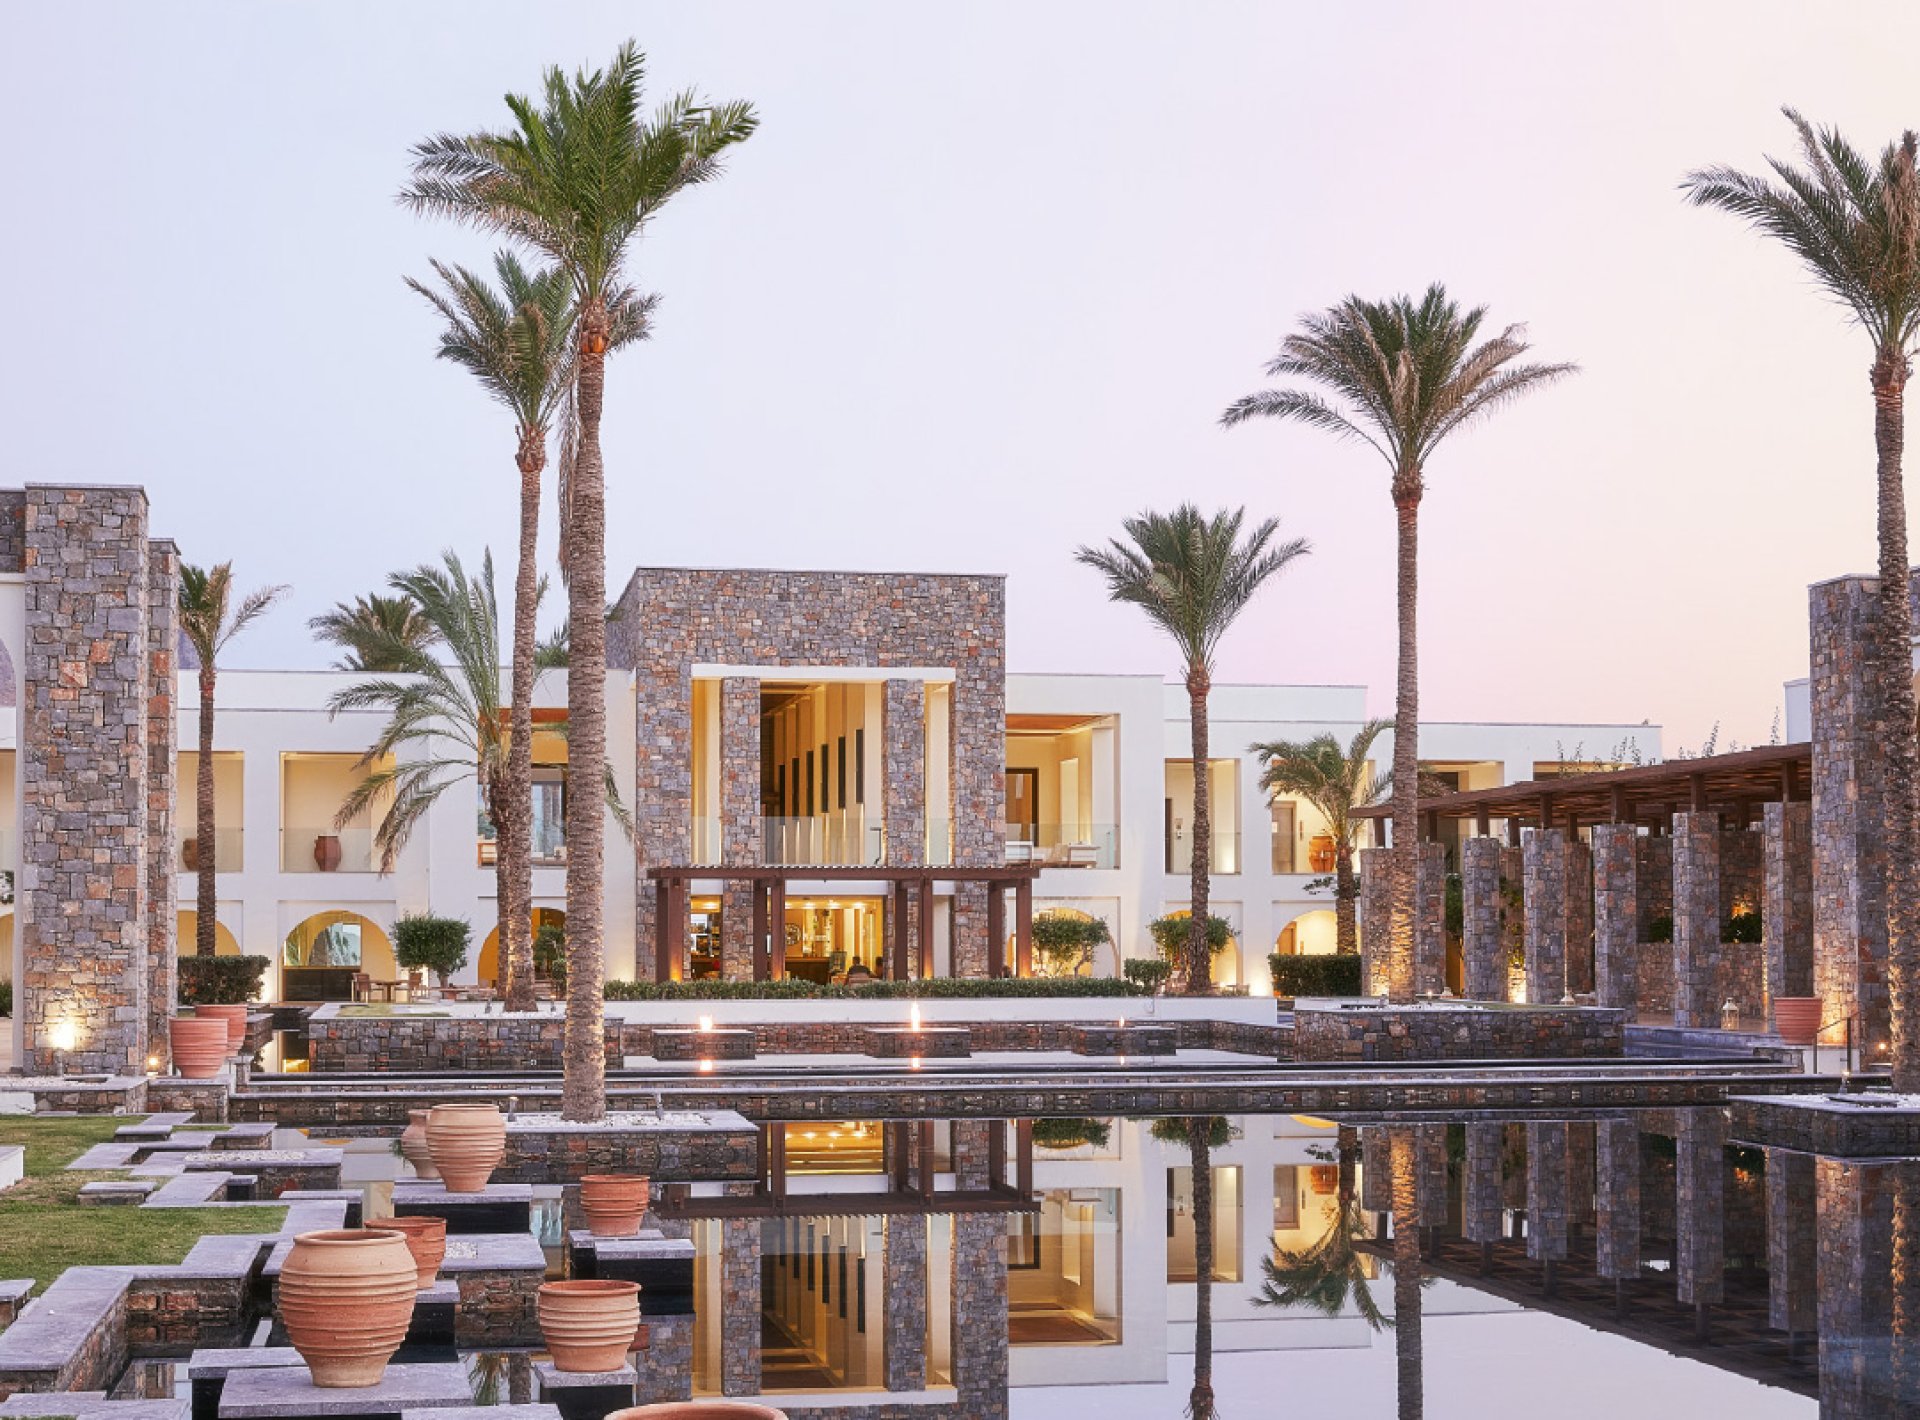 ISholidays Creta Amirandes Luxury Beach Villa 2 Bedroom  Seafront with Private Heated Pool & Garden